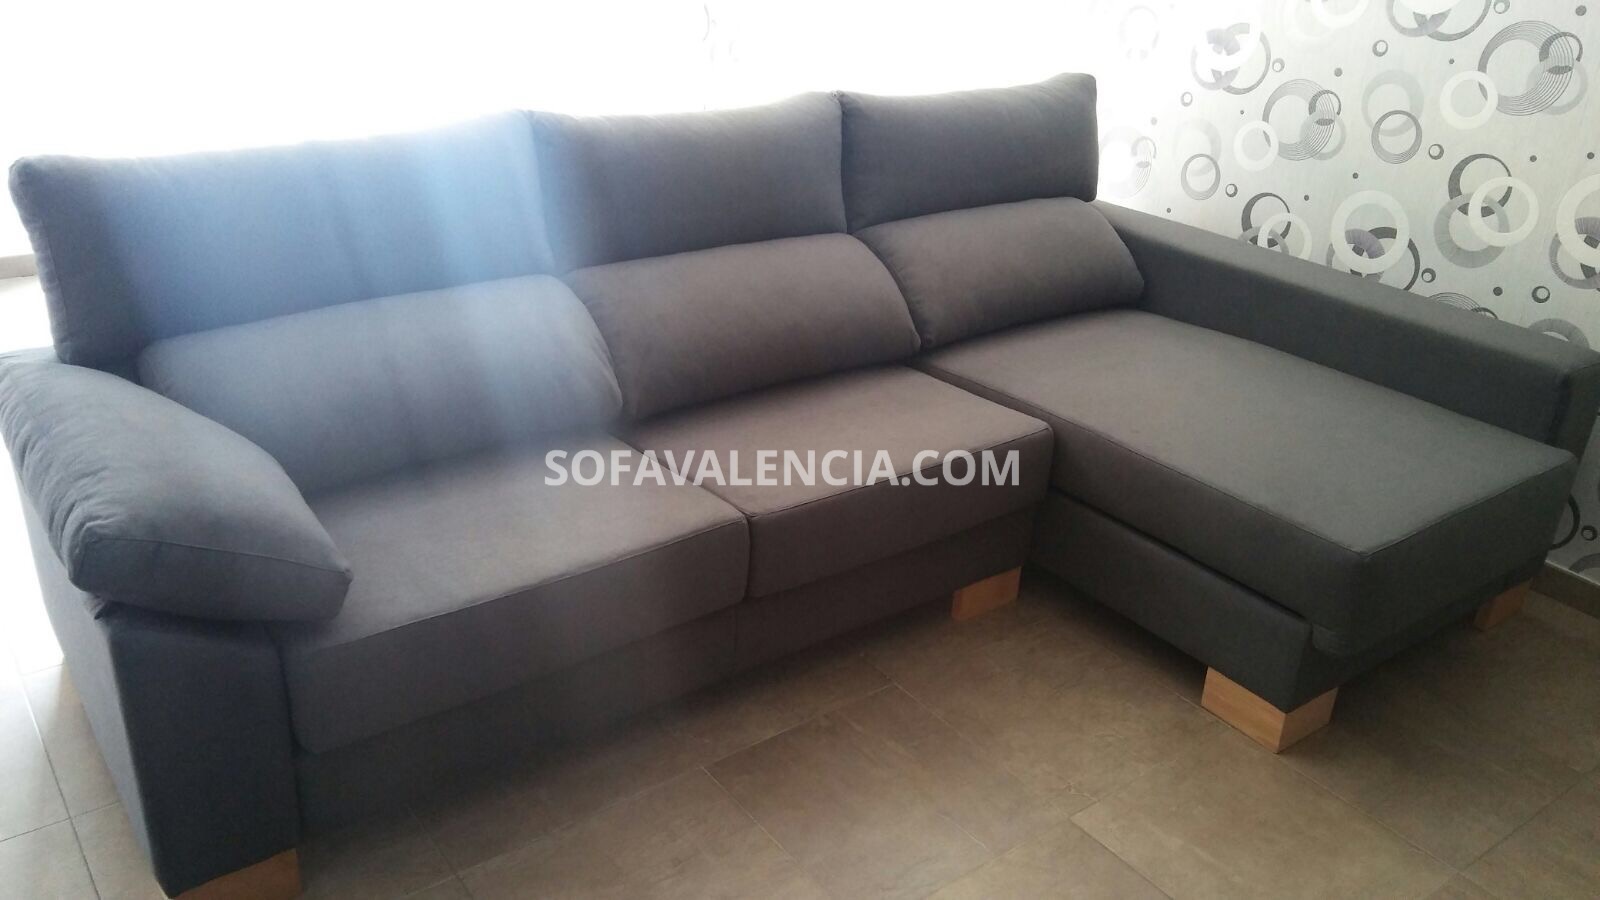 sofa-valencia-fotos-clientes-80